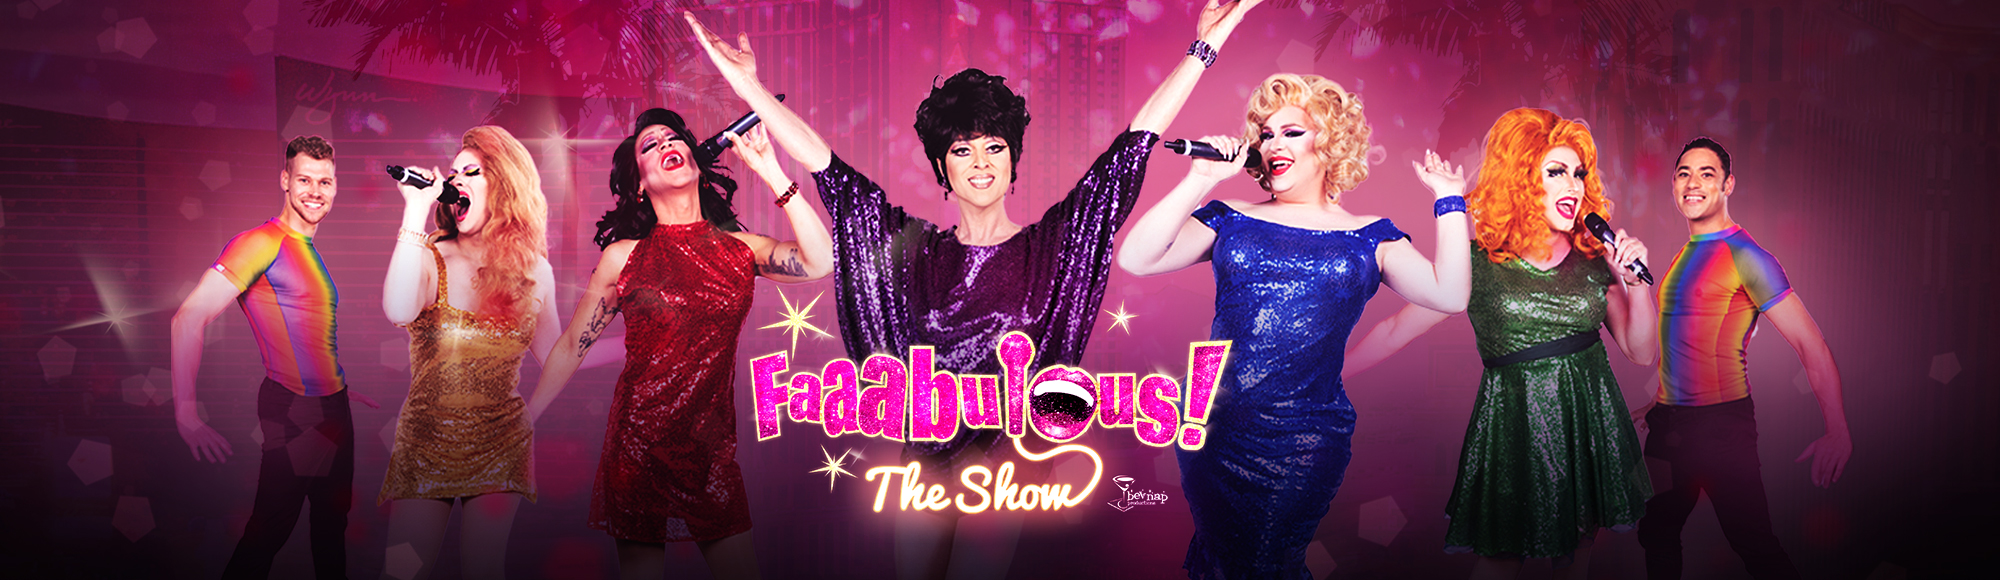 Faaabulous! The Show show